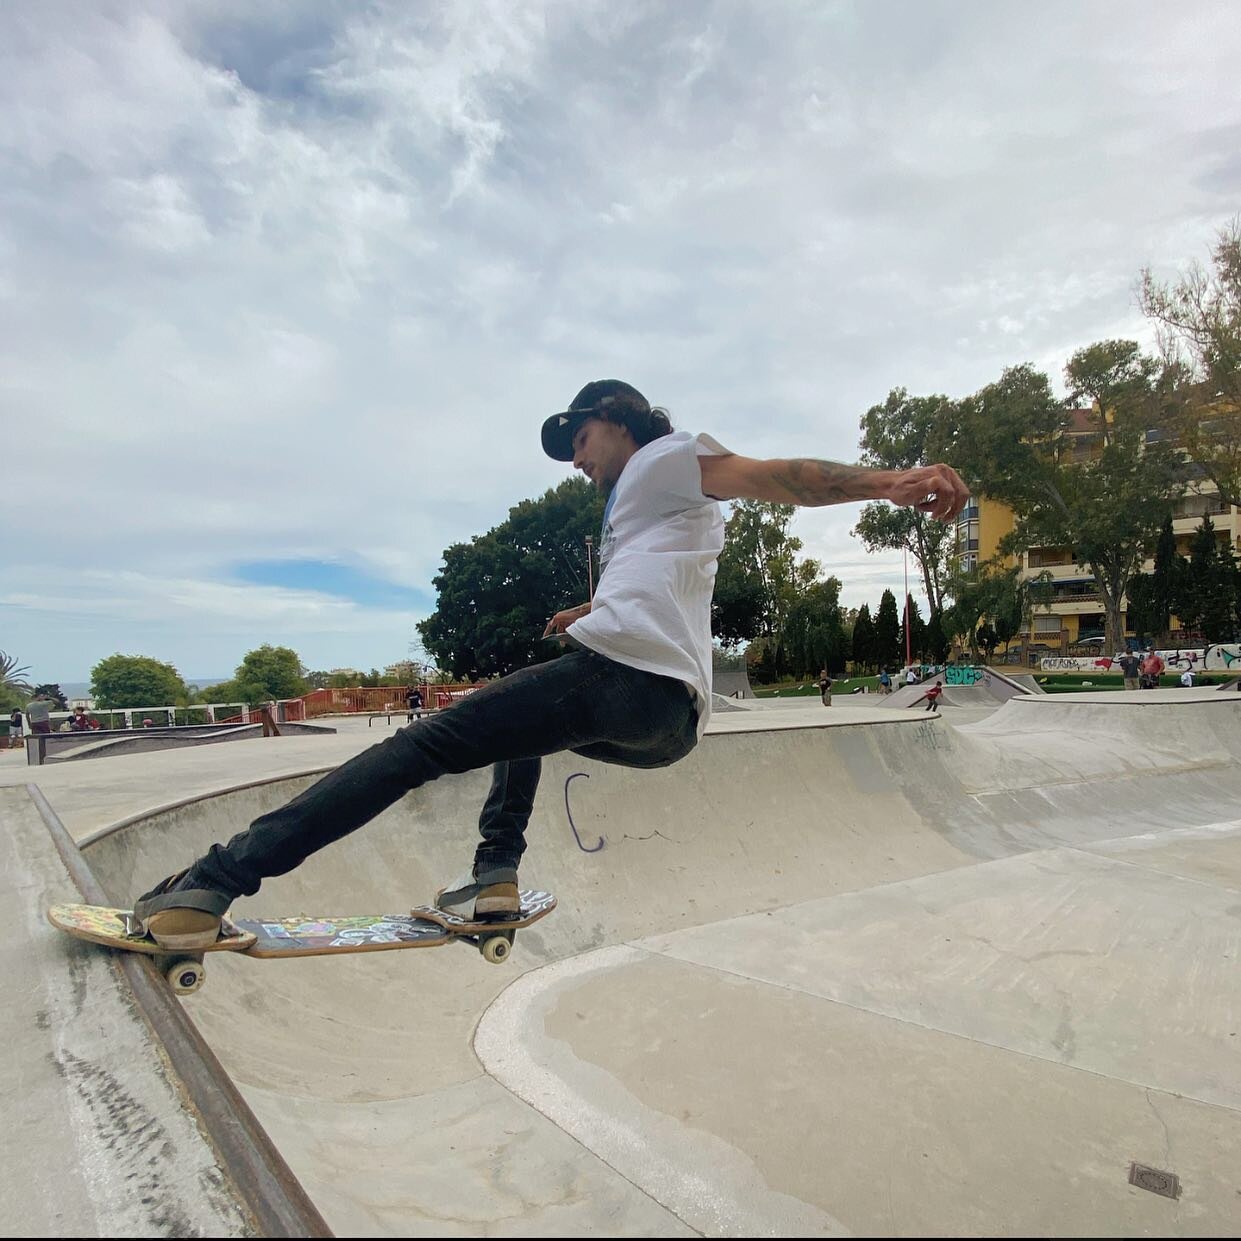 David charging batteries🔋👌🏻
#dimensionboards #streetboard #skatepark #malaga #picture #snakeeverydamnday #snakeboard